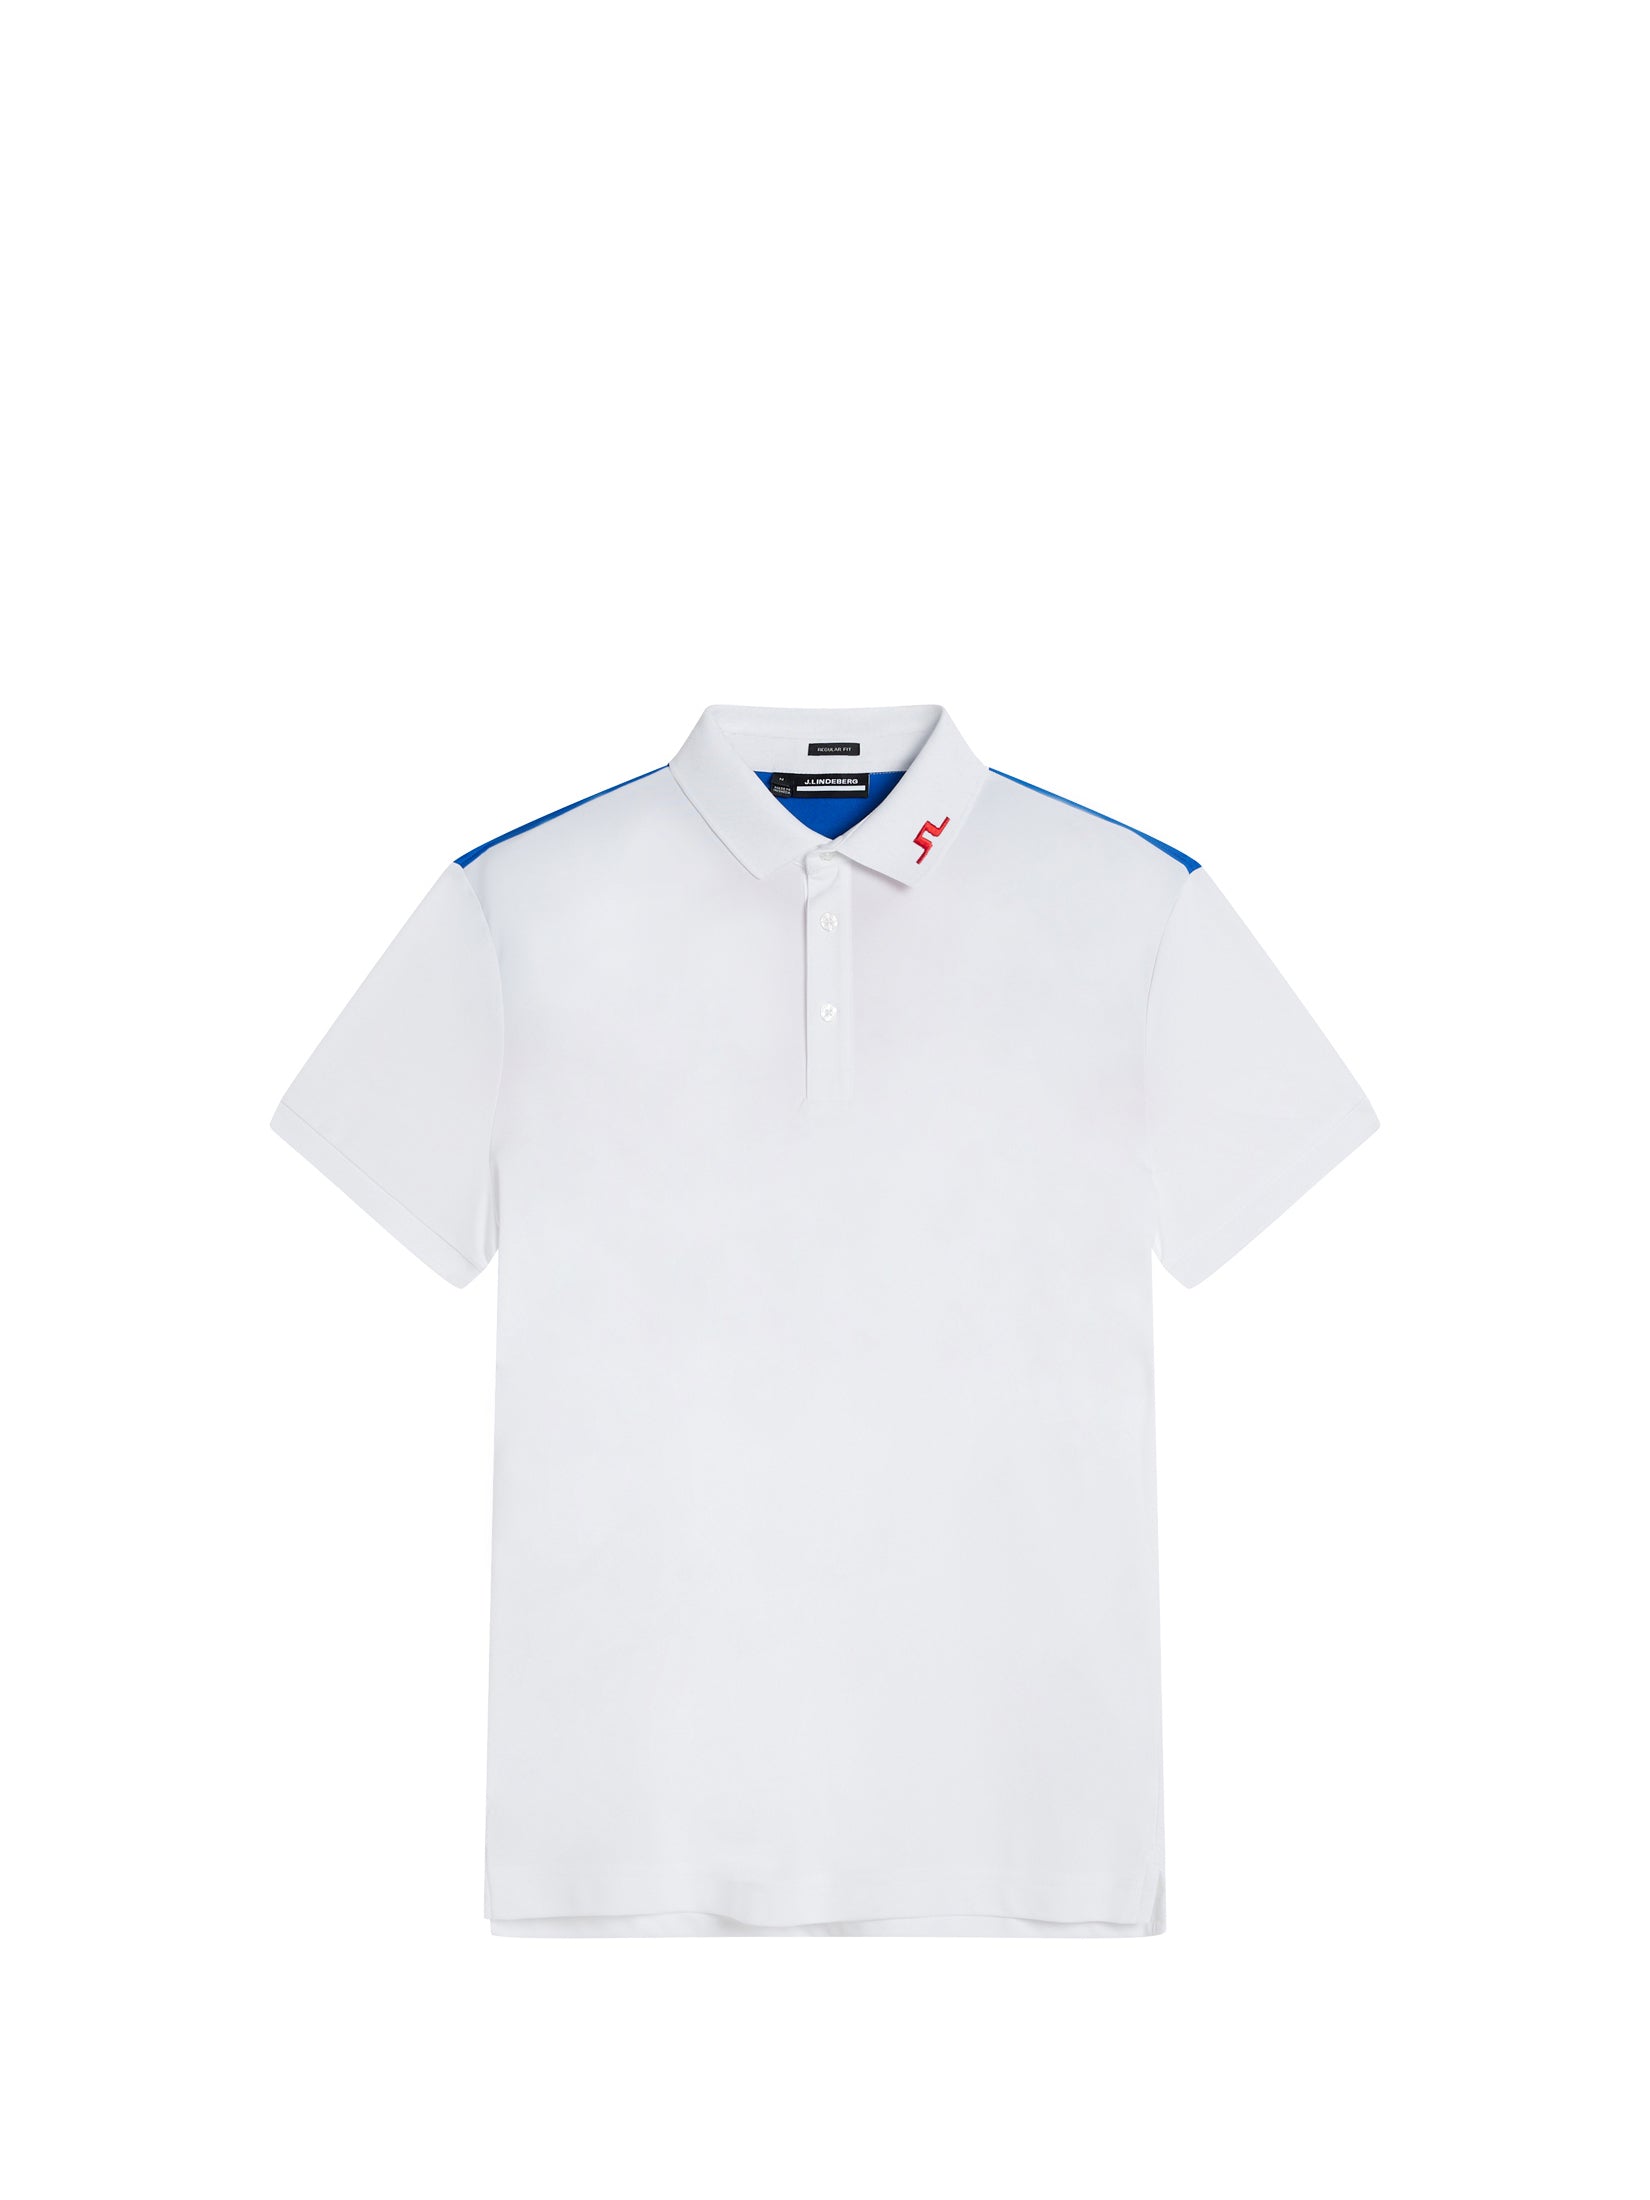 Louis Vuitton Slim Shirt with Micro Design White. Size 43